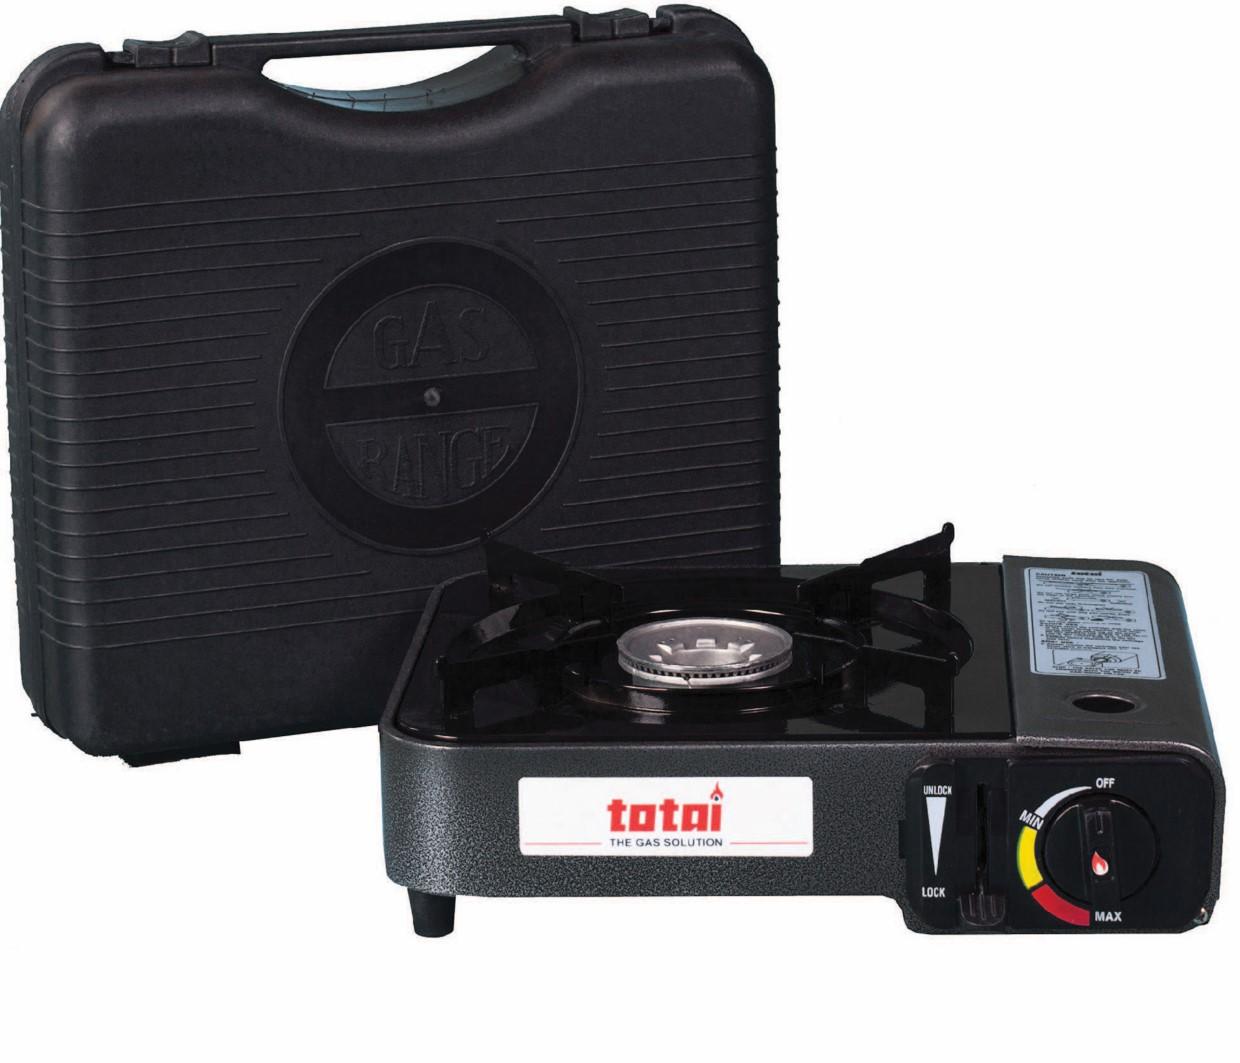 Cartridge Gas Stove totai gas stove mini stove camping stove